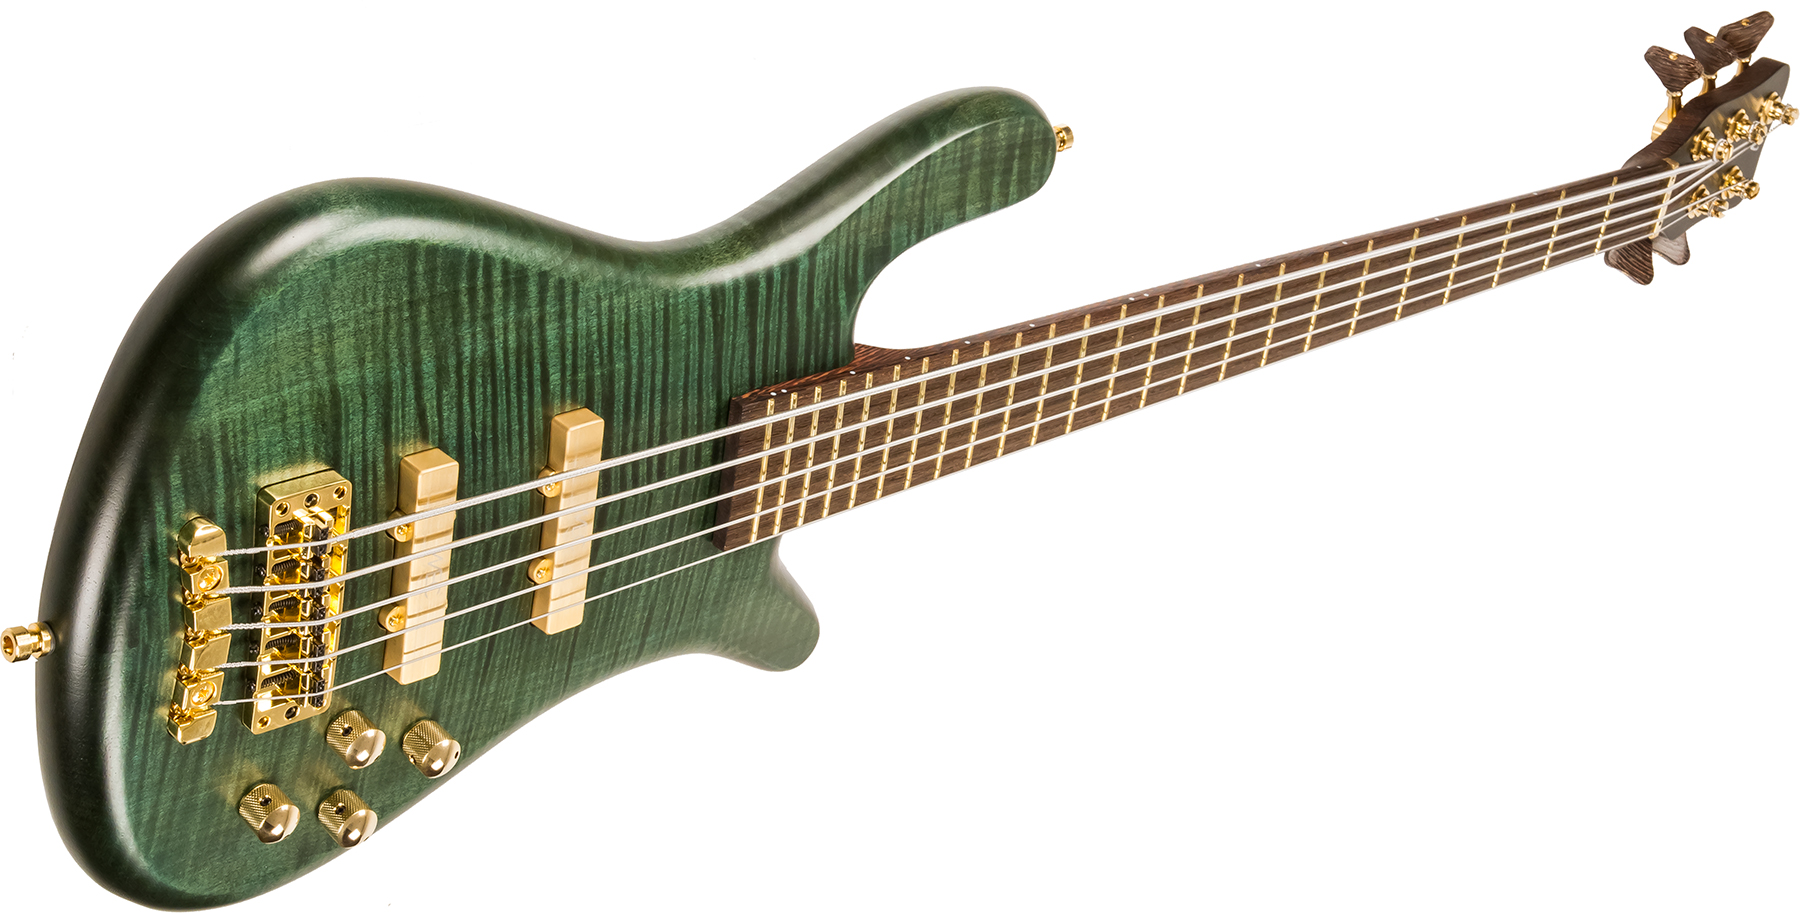 Warwick Custom Shop Streamer Lx 5-strings - Petrol Green Trans Satin - Solid body electric bass - Variation 2